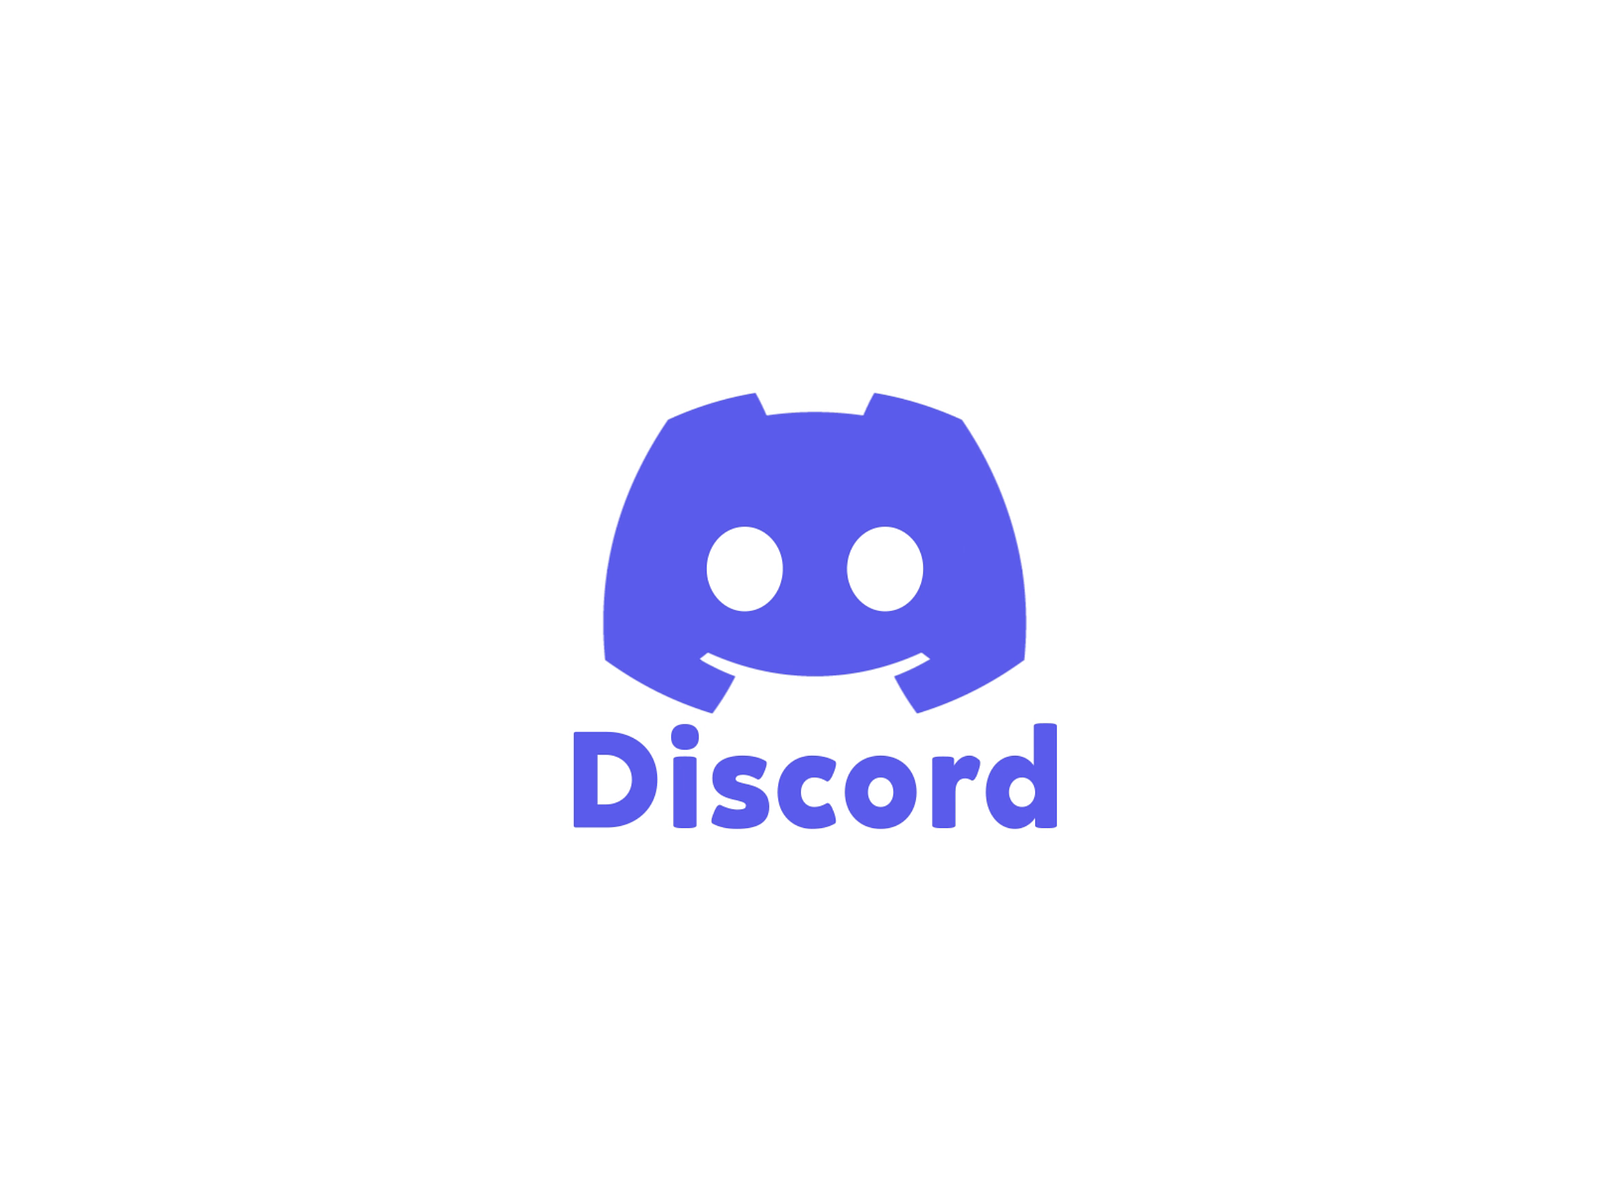 Discord logo animation by Ahmad Ali on Dribbble